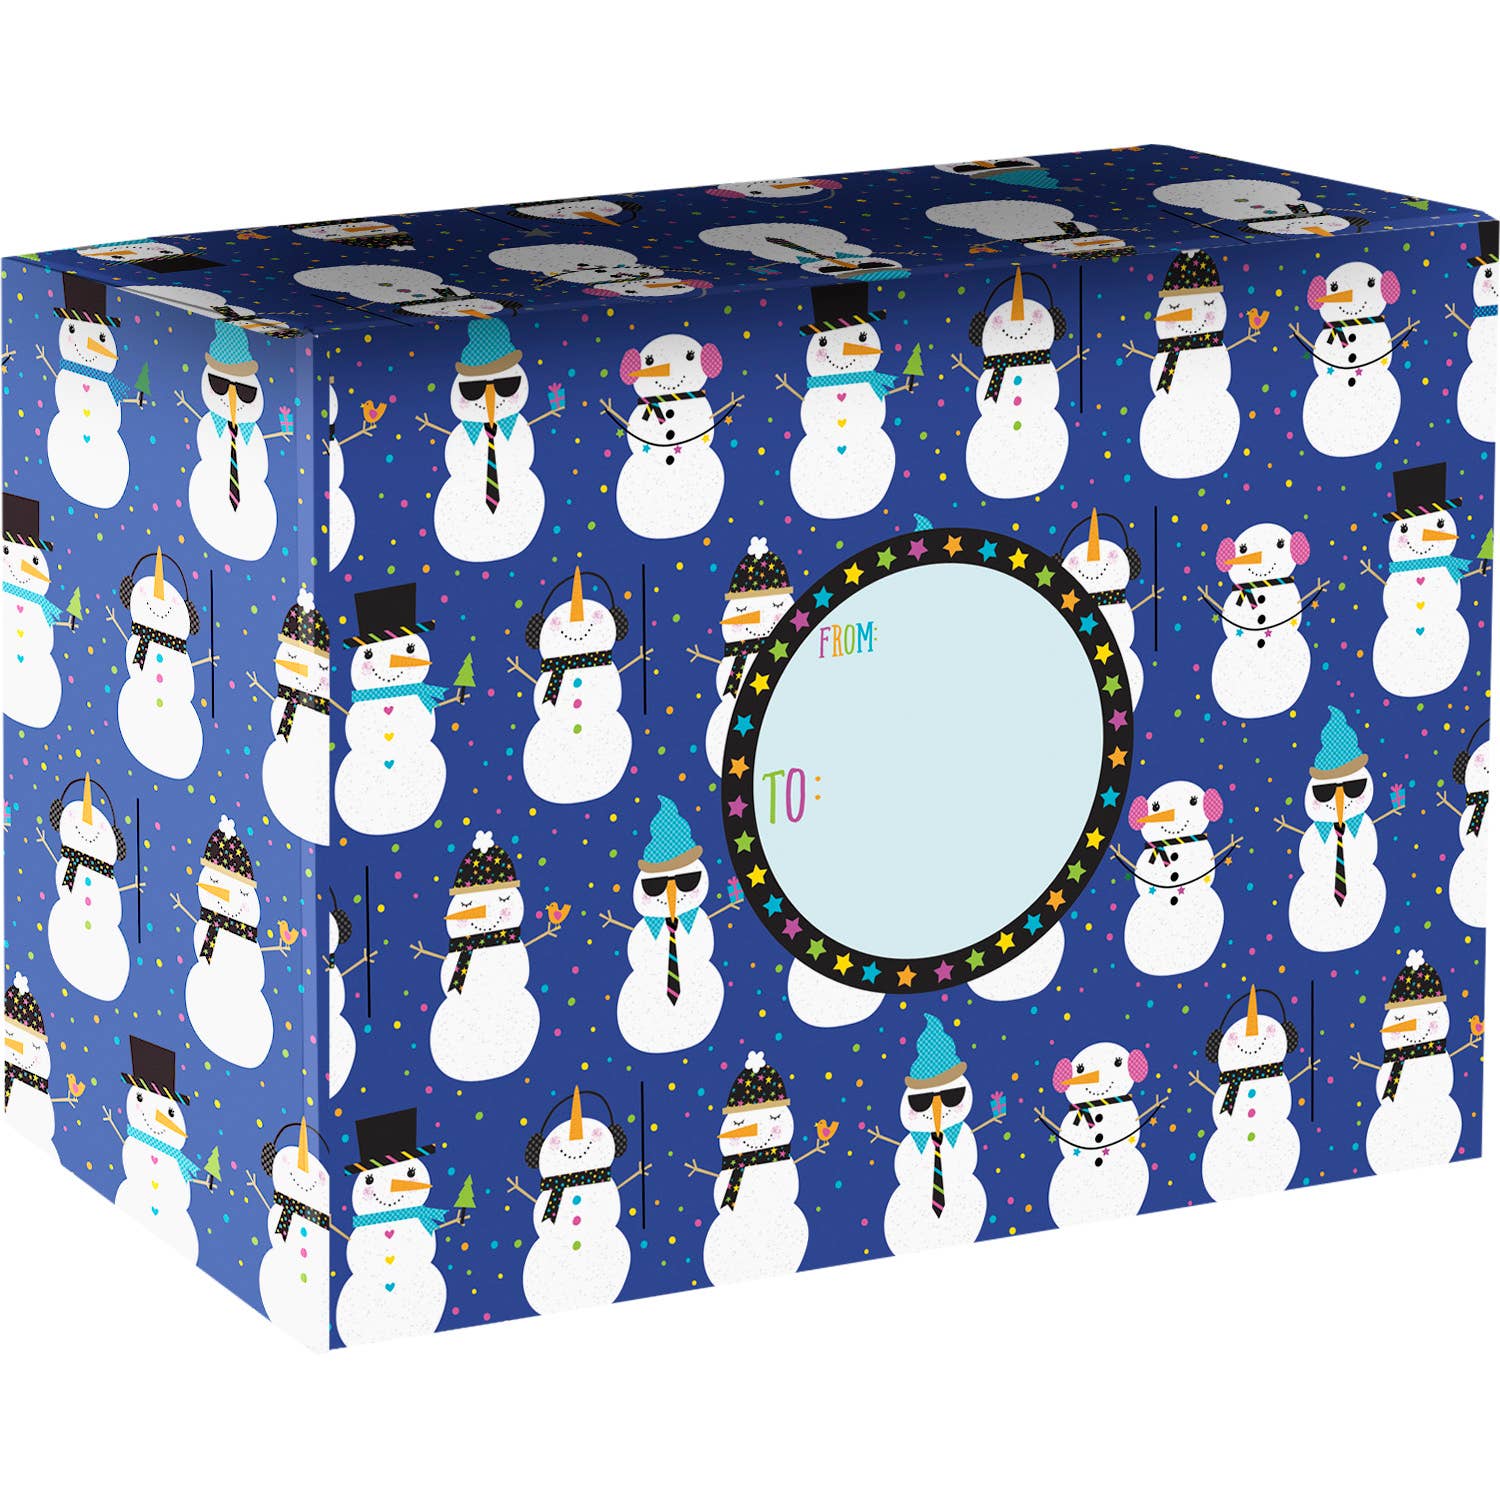 Snowman Party Mailing Boxes - Medium